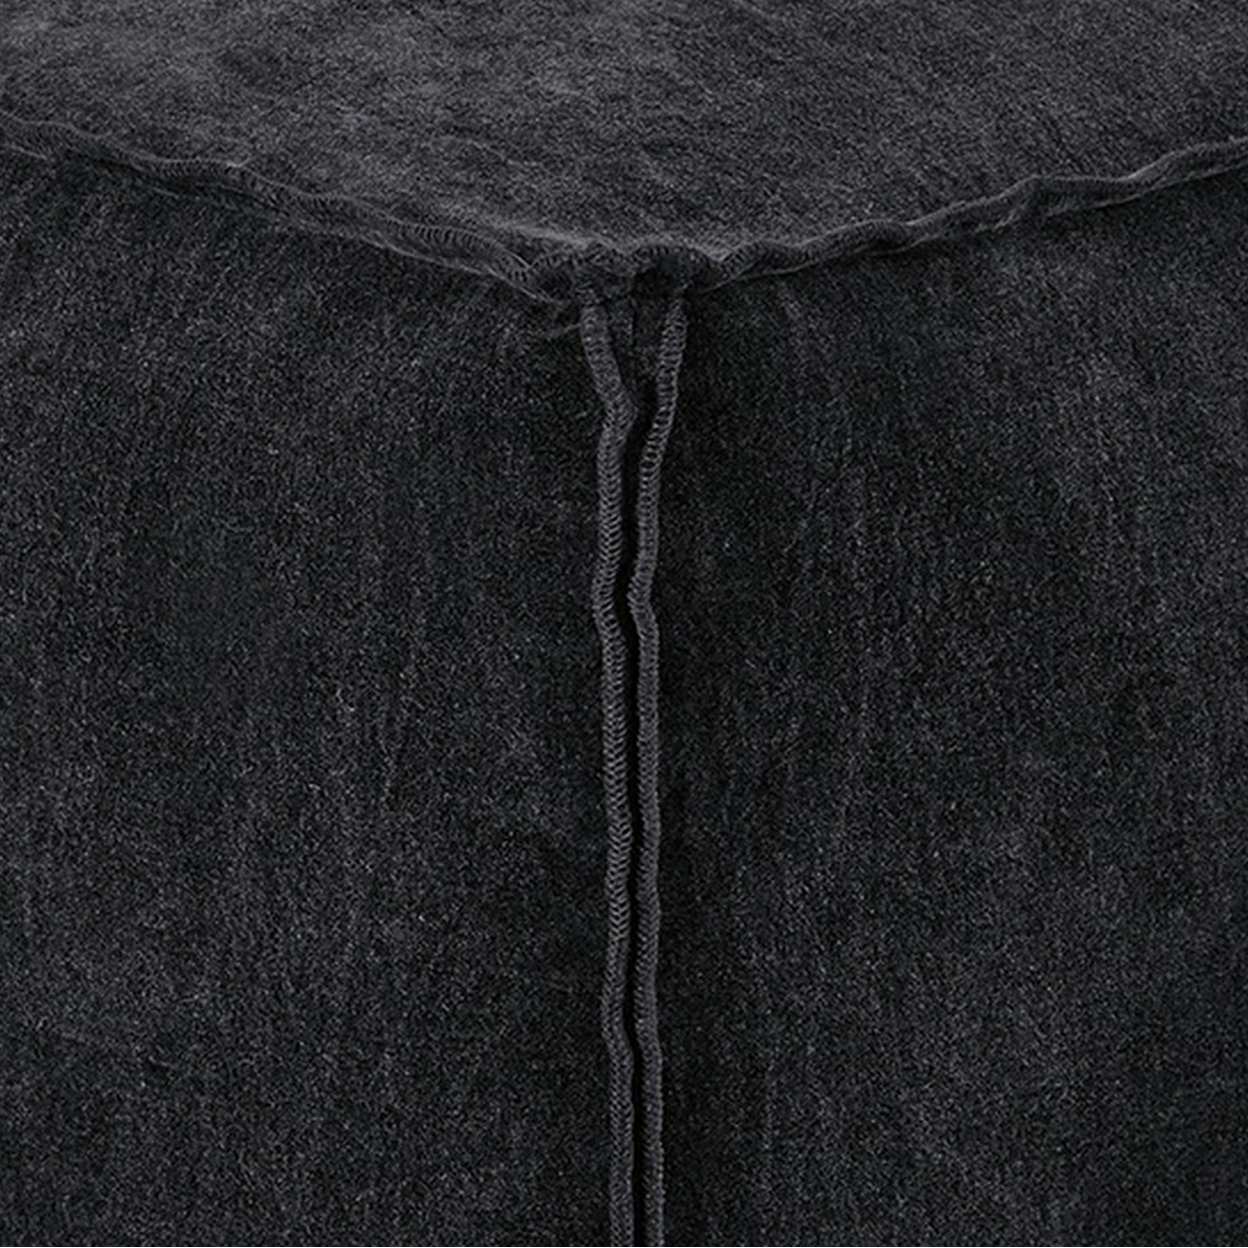 Cube Pouf With Cotton Velvet Cover, Black- Saltoro Sherpi